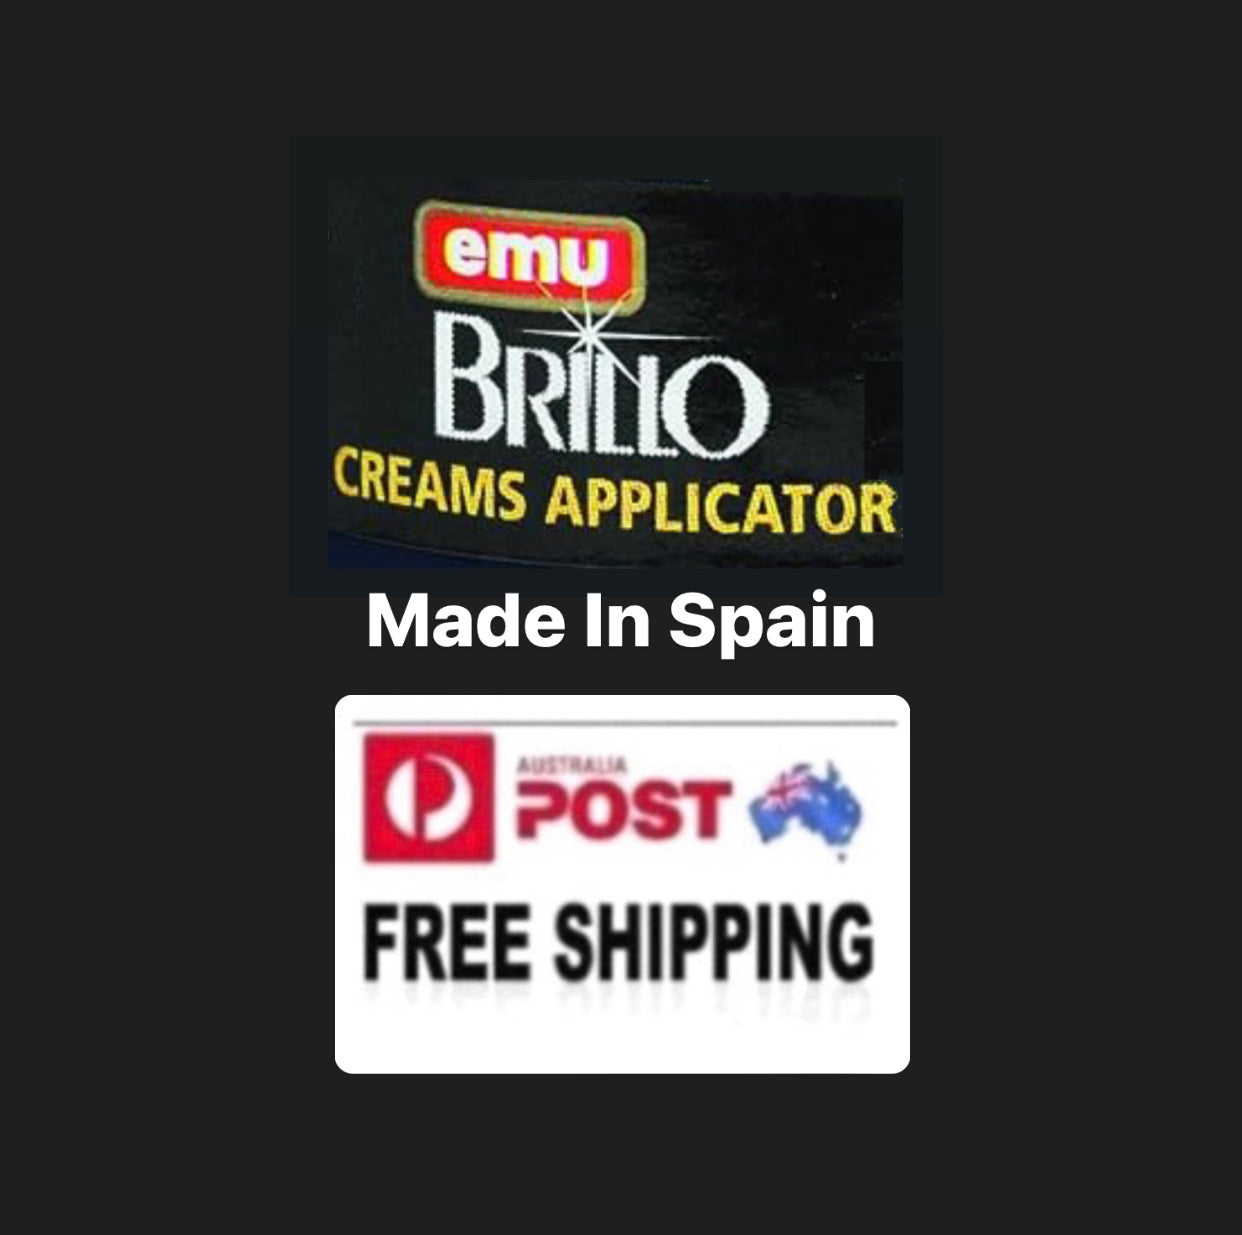 Emu Brillo Navy Blue Renovating Cream Polish Sponge Applicator 50ml Made In Spain